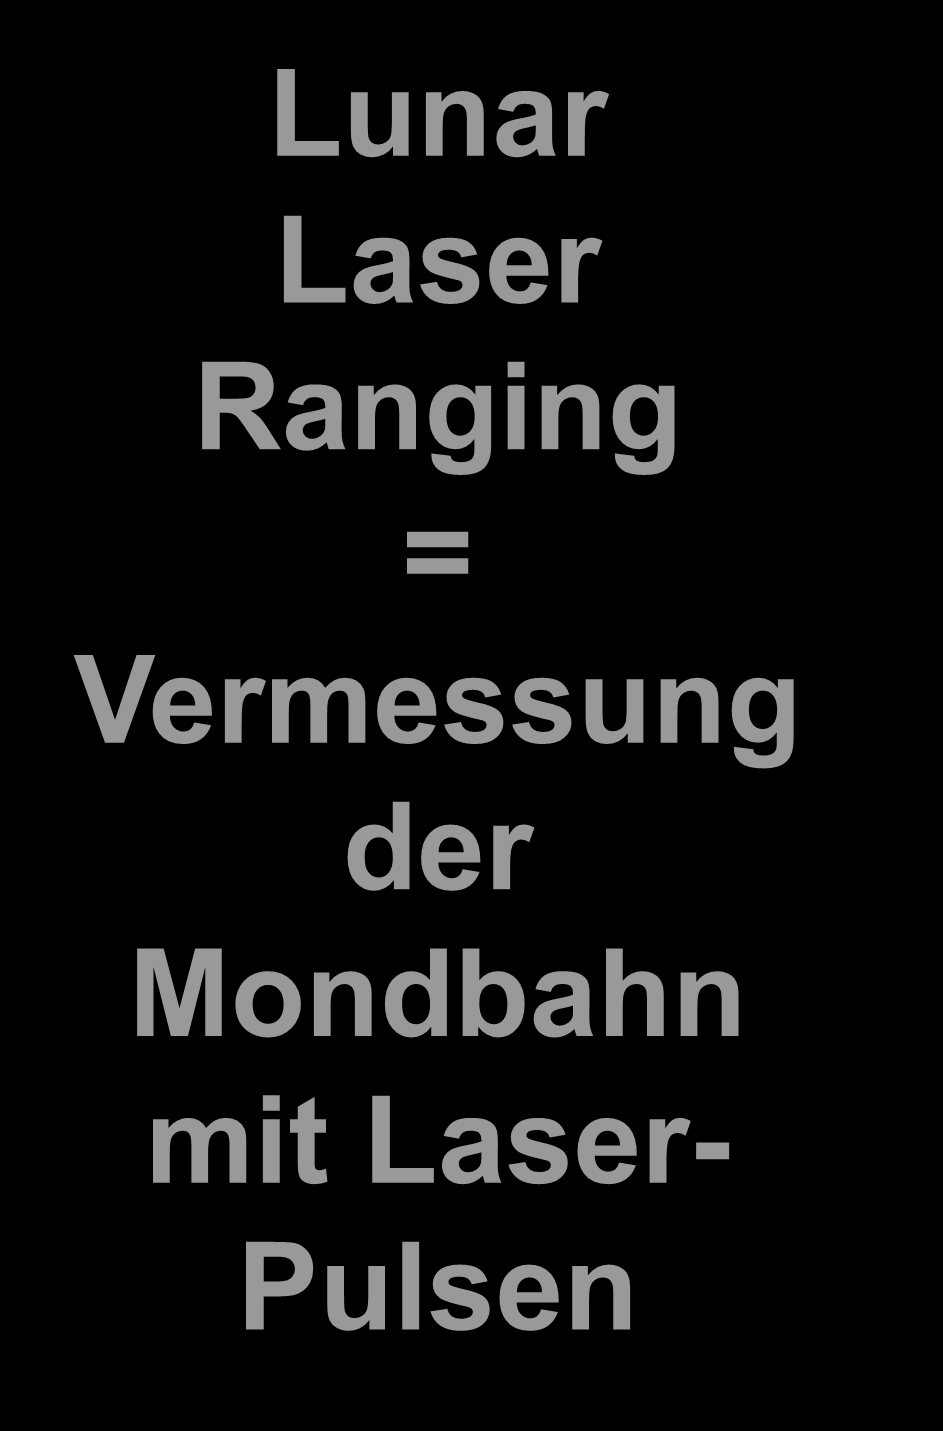 Lunar Laser Ranging =